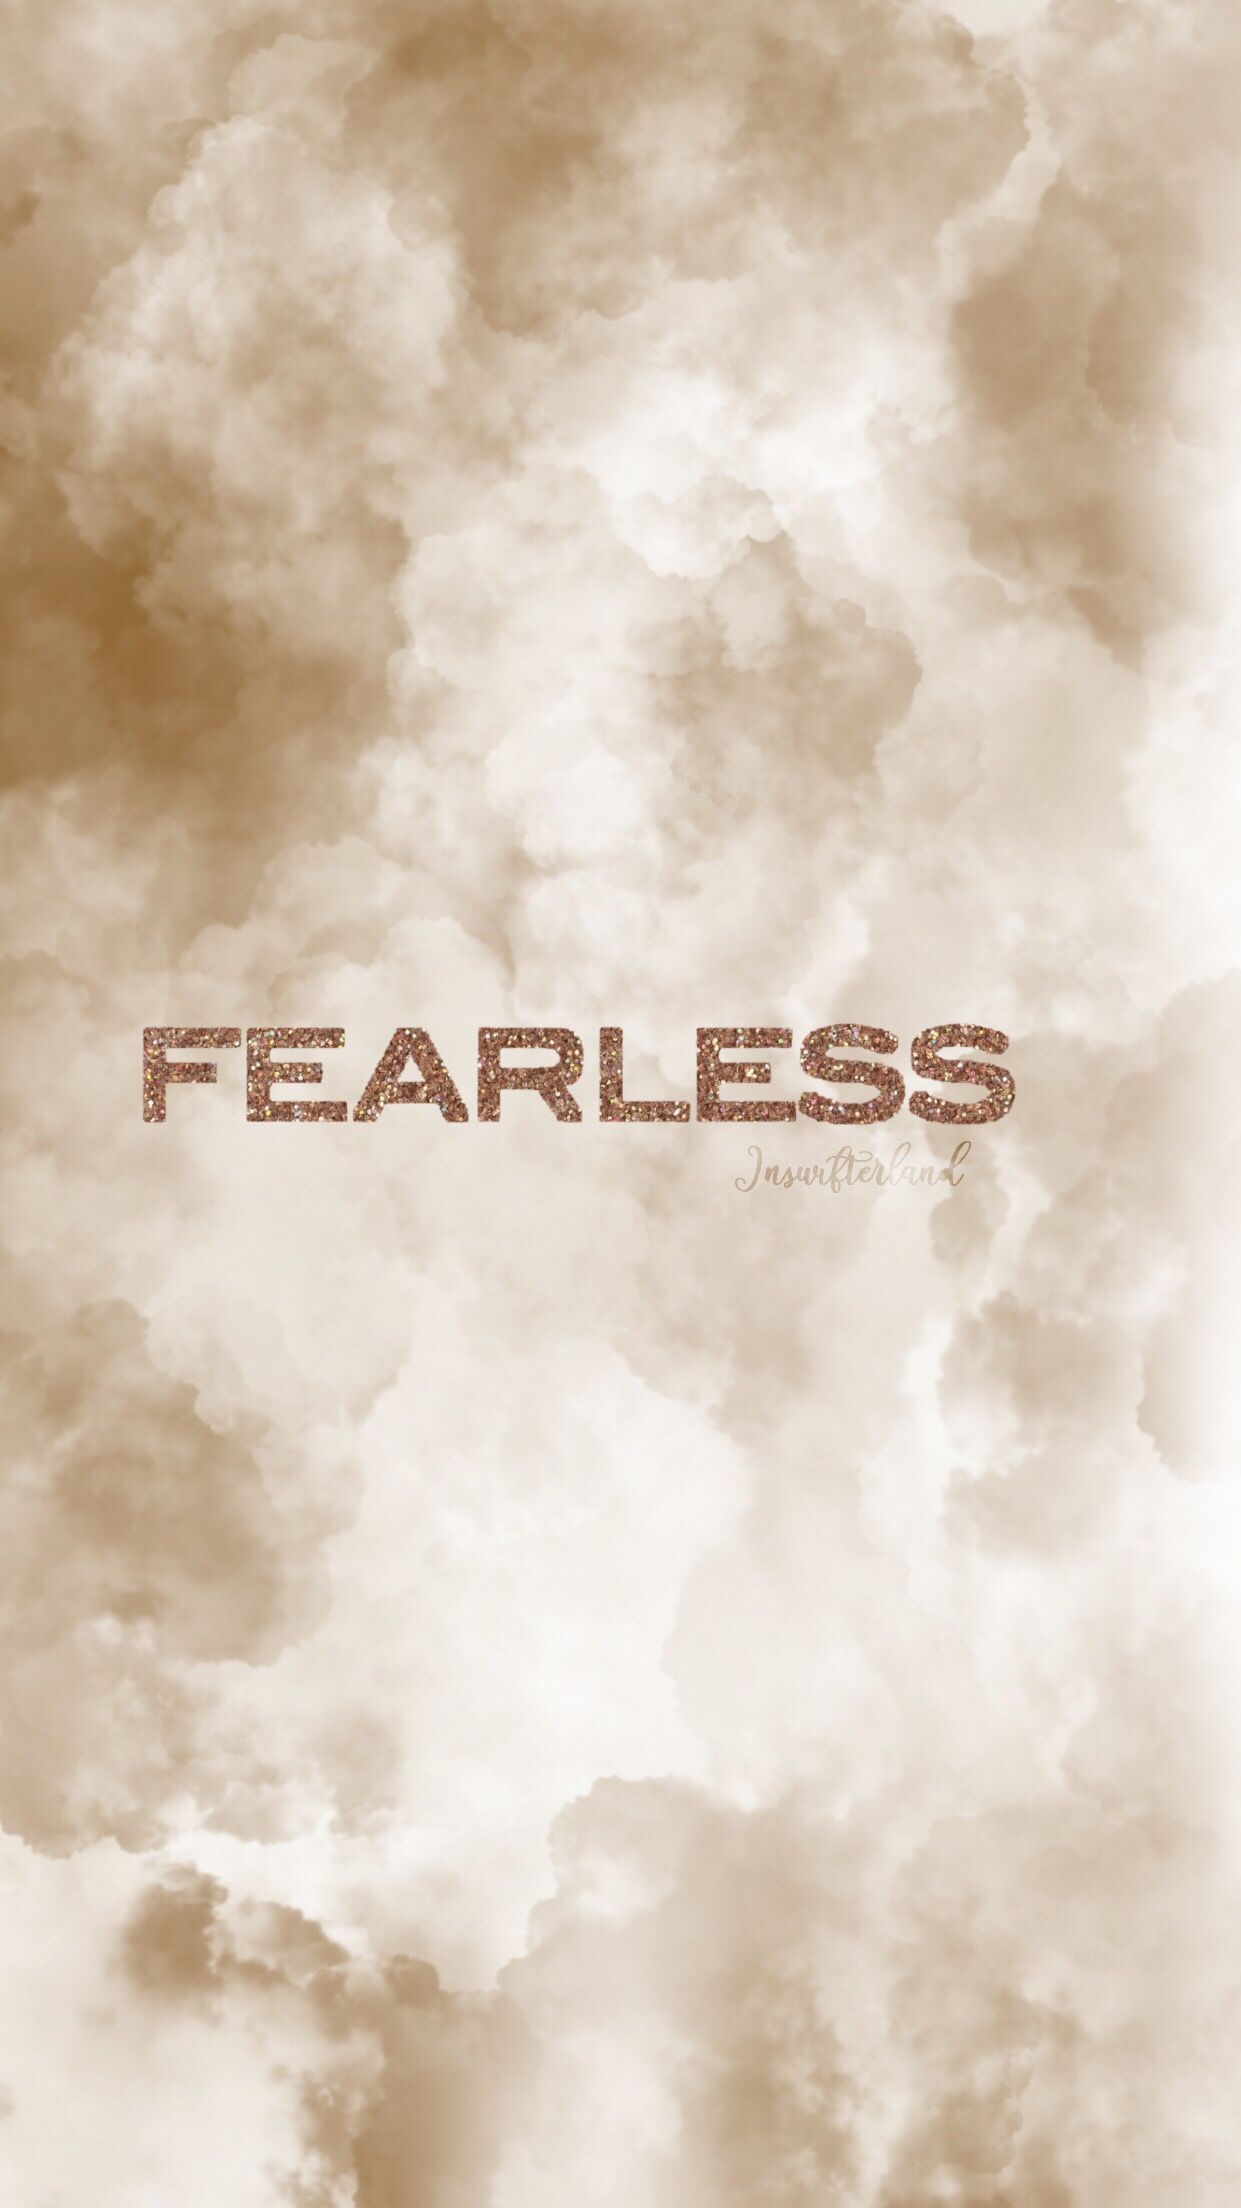 Fearless by jessica sorensen - Taylor Swift